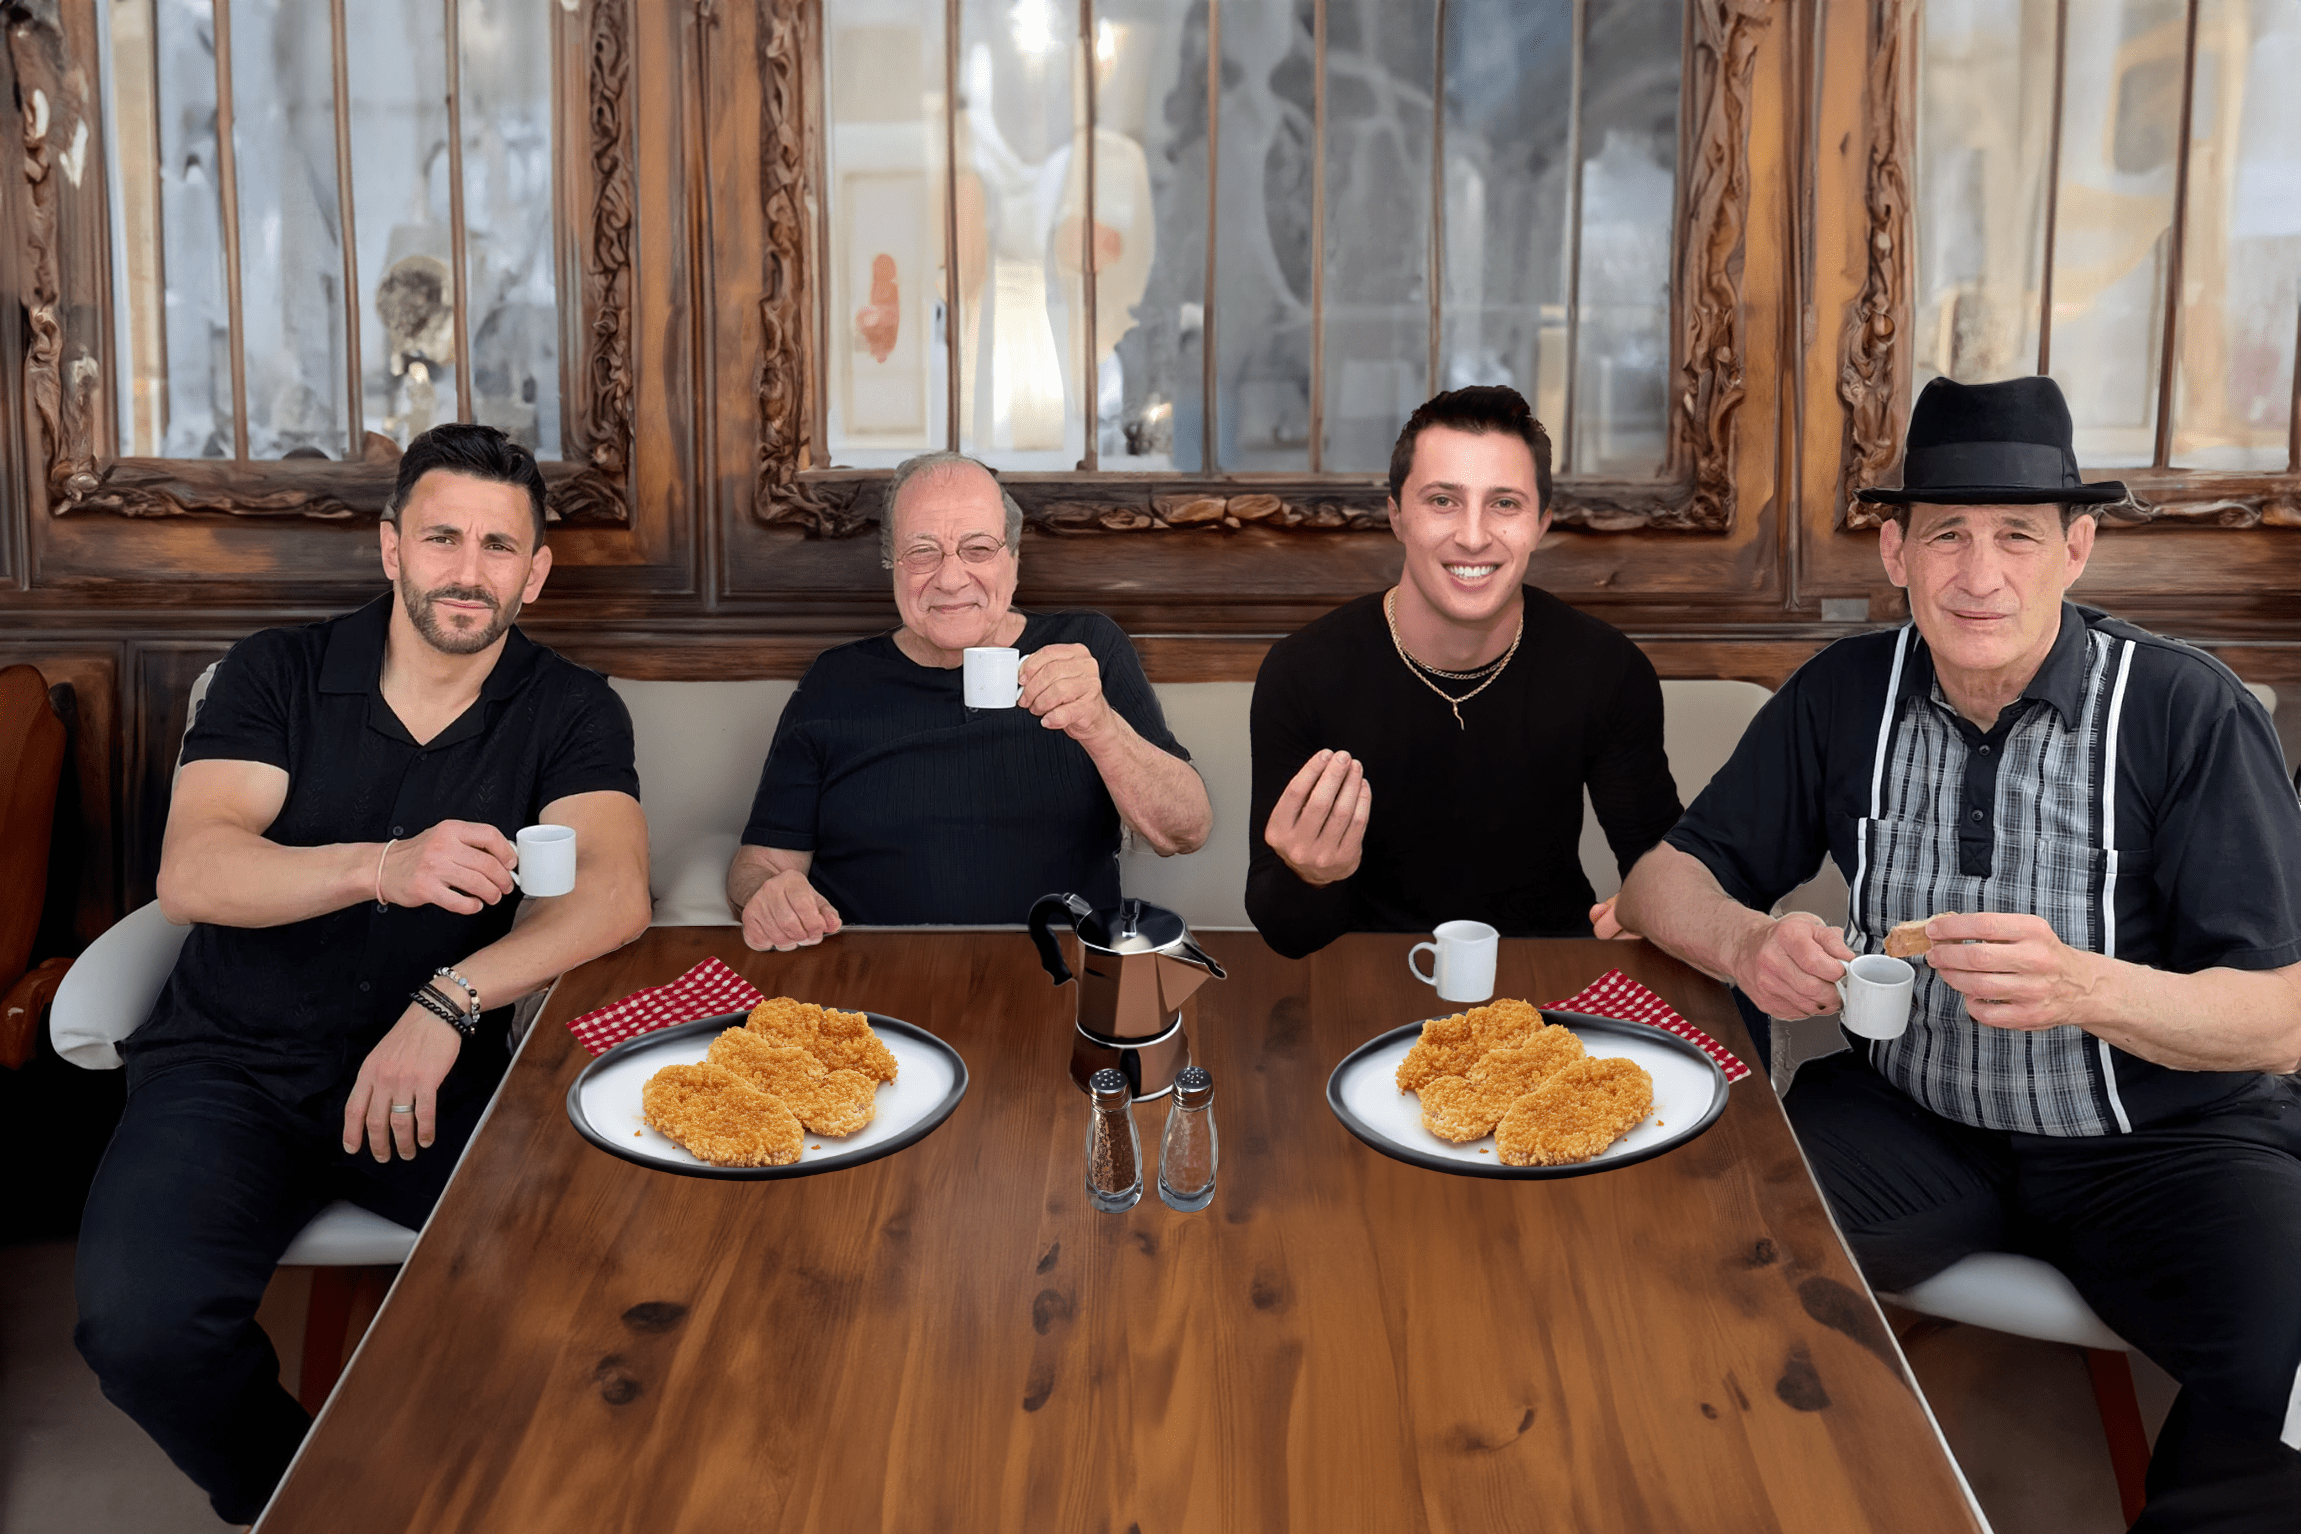 Tommy DeVito, Robert Funaro, Jason Cerbone, Dan Grimaldi at a Cafe